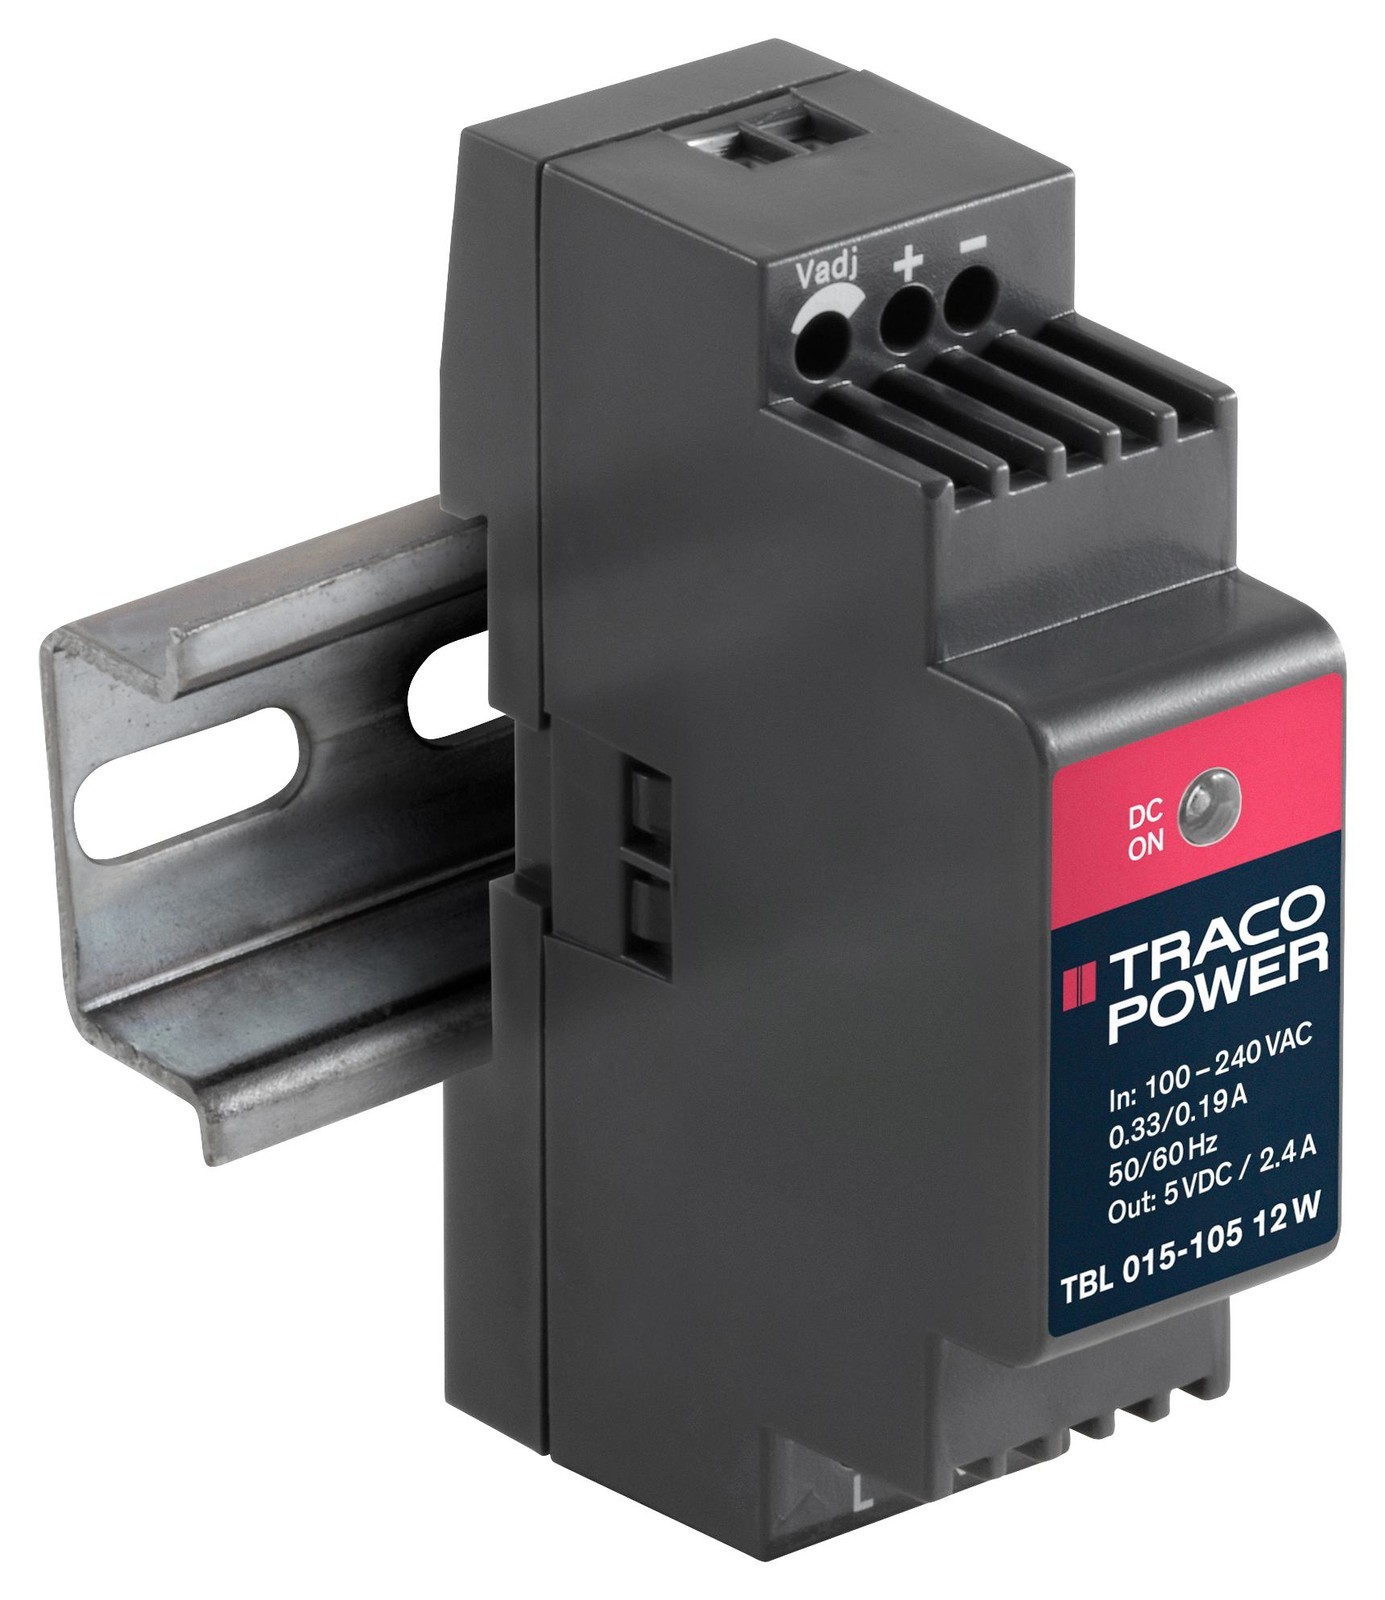 TRACO Power Tbl 015-105 Power Supply, 5V, 12W